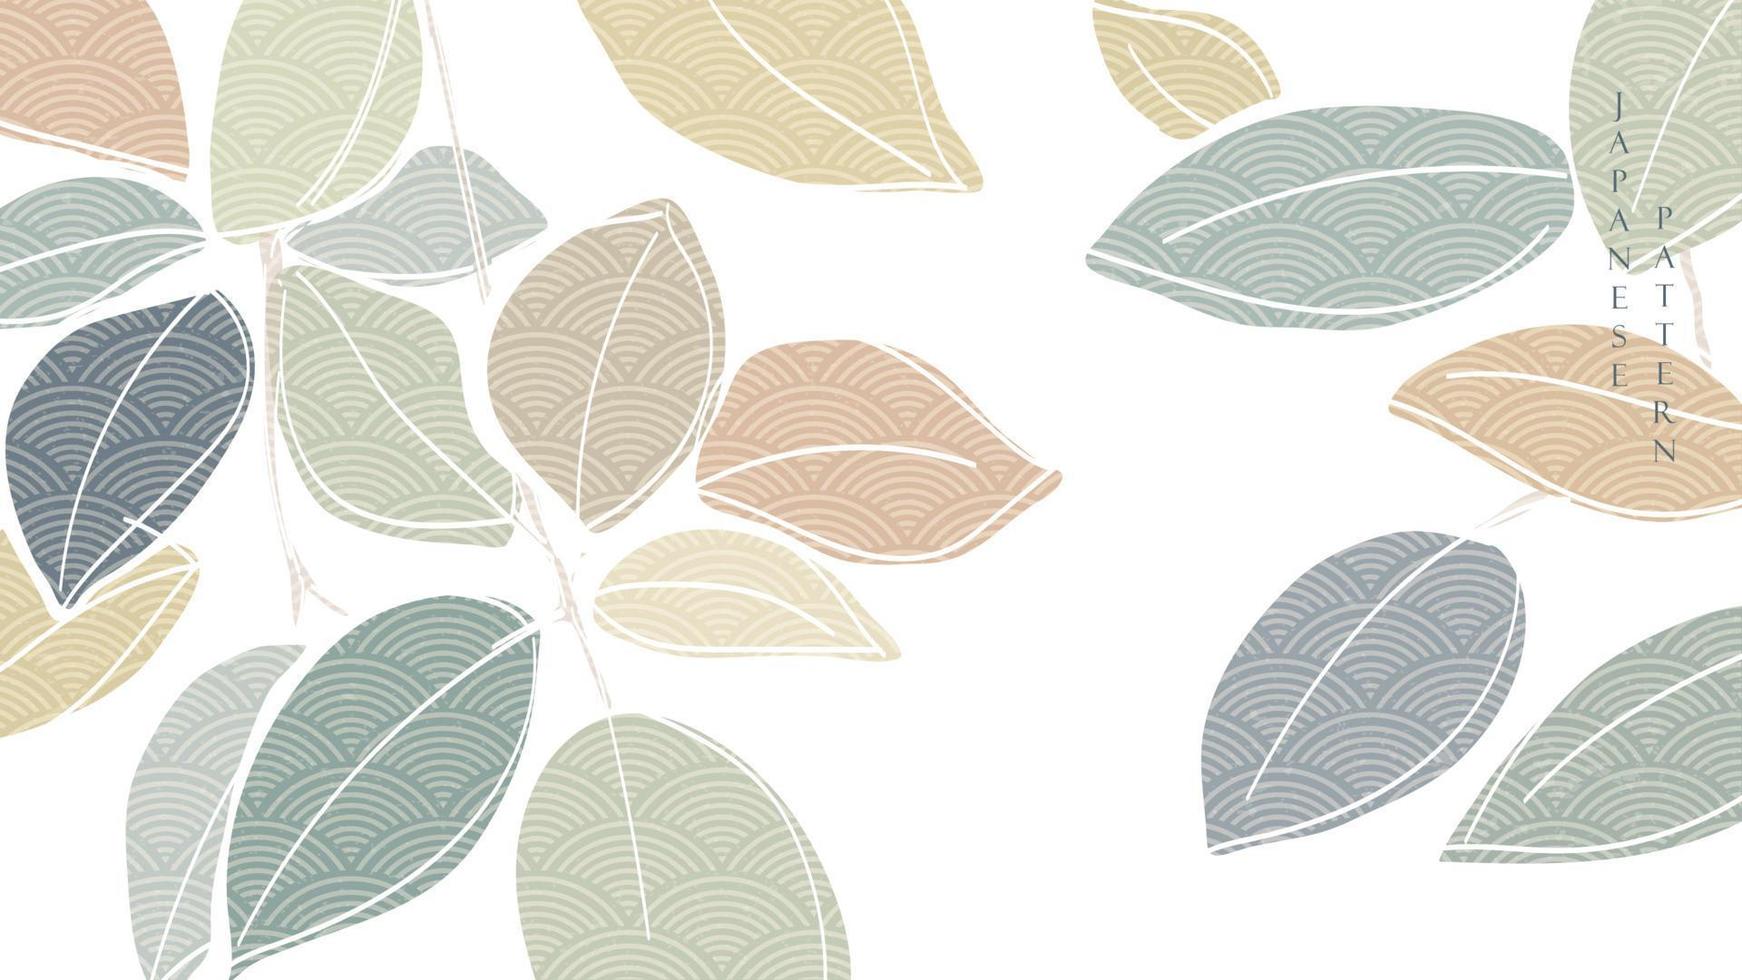 abstrakt löv bakgrund med japansk Vinka mönster vektor. linje dekoration baner design med naturlig konst element i årgång stil. vektor